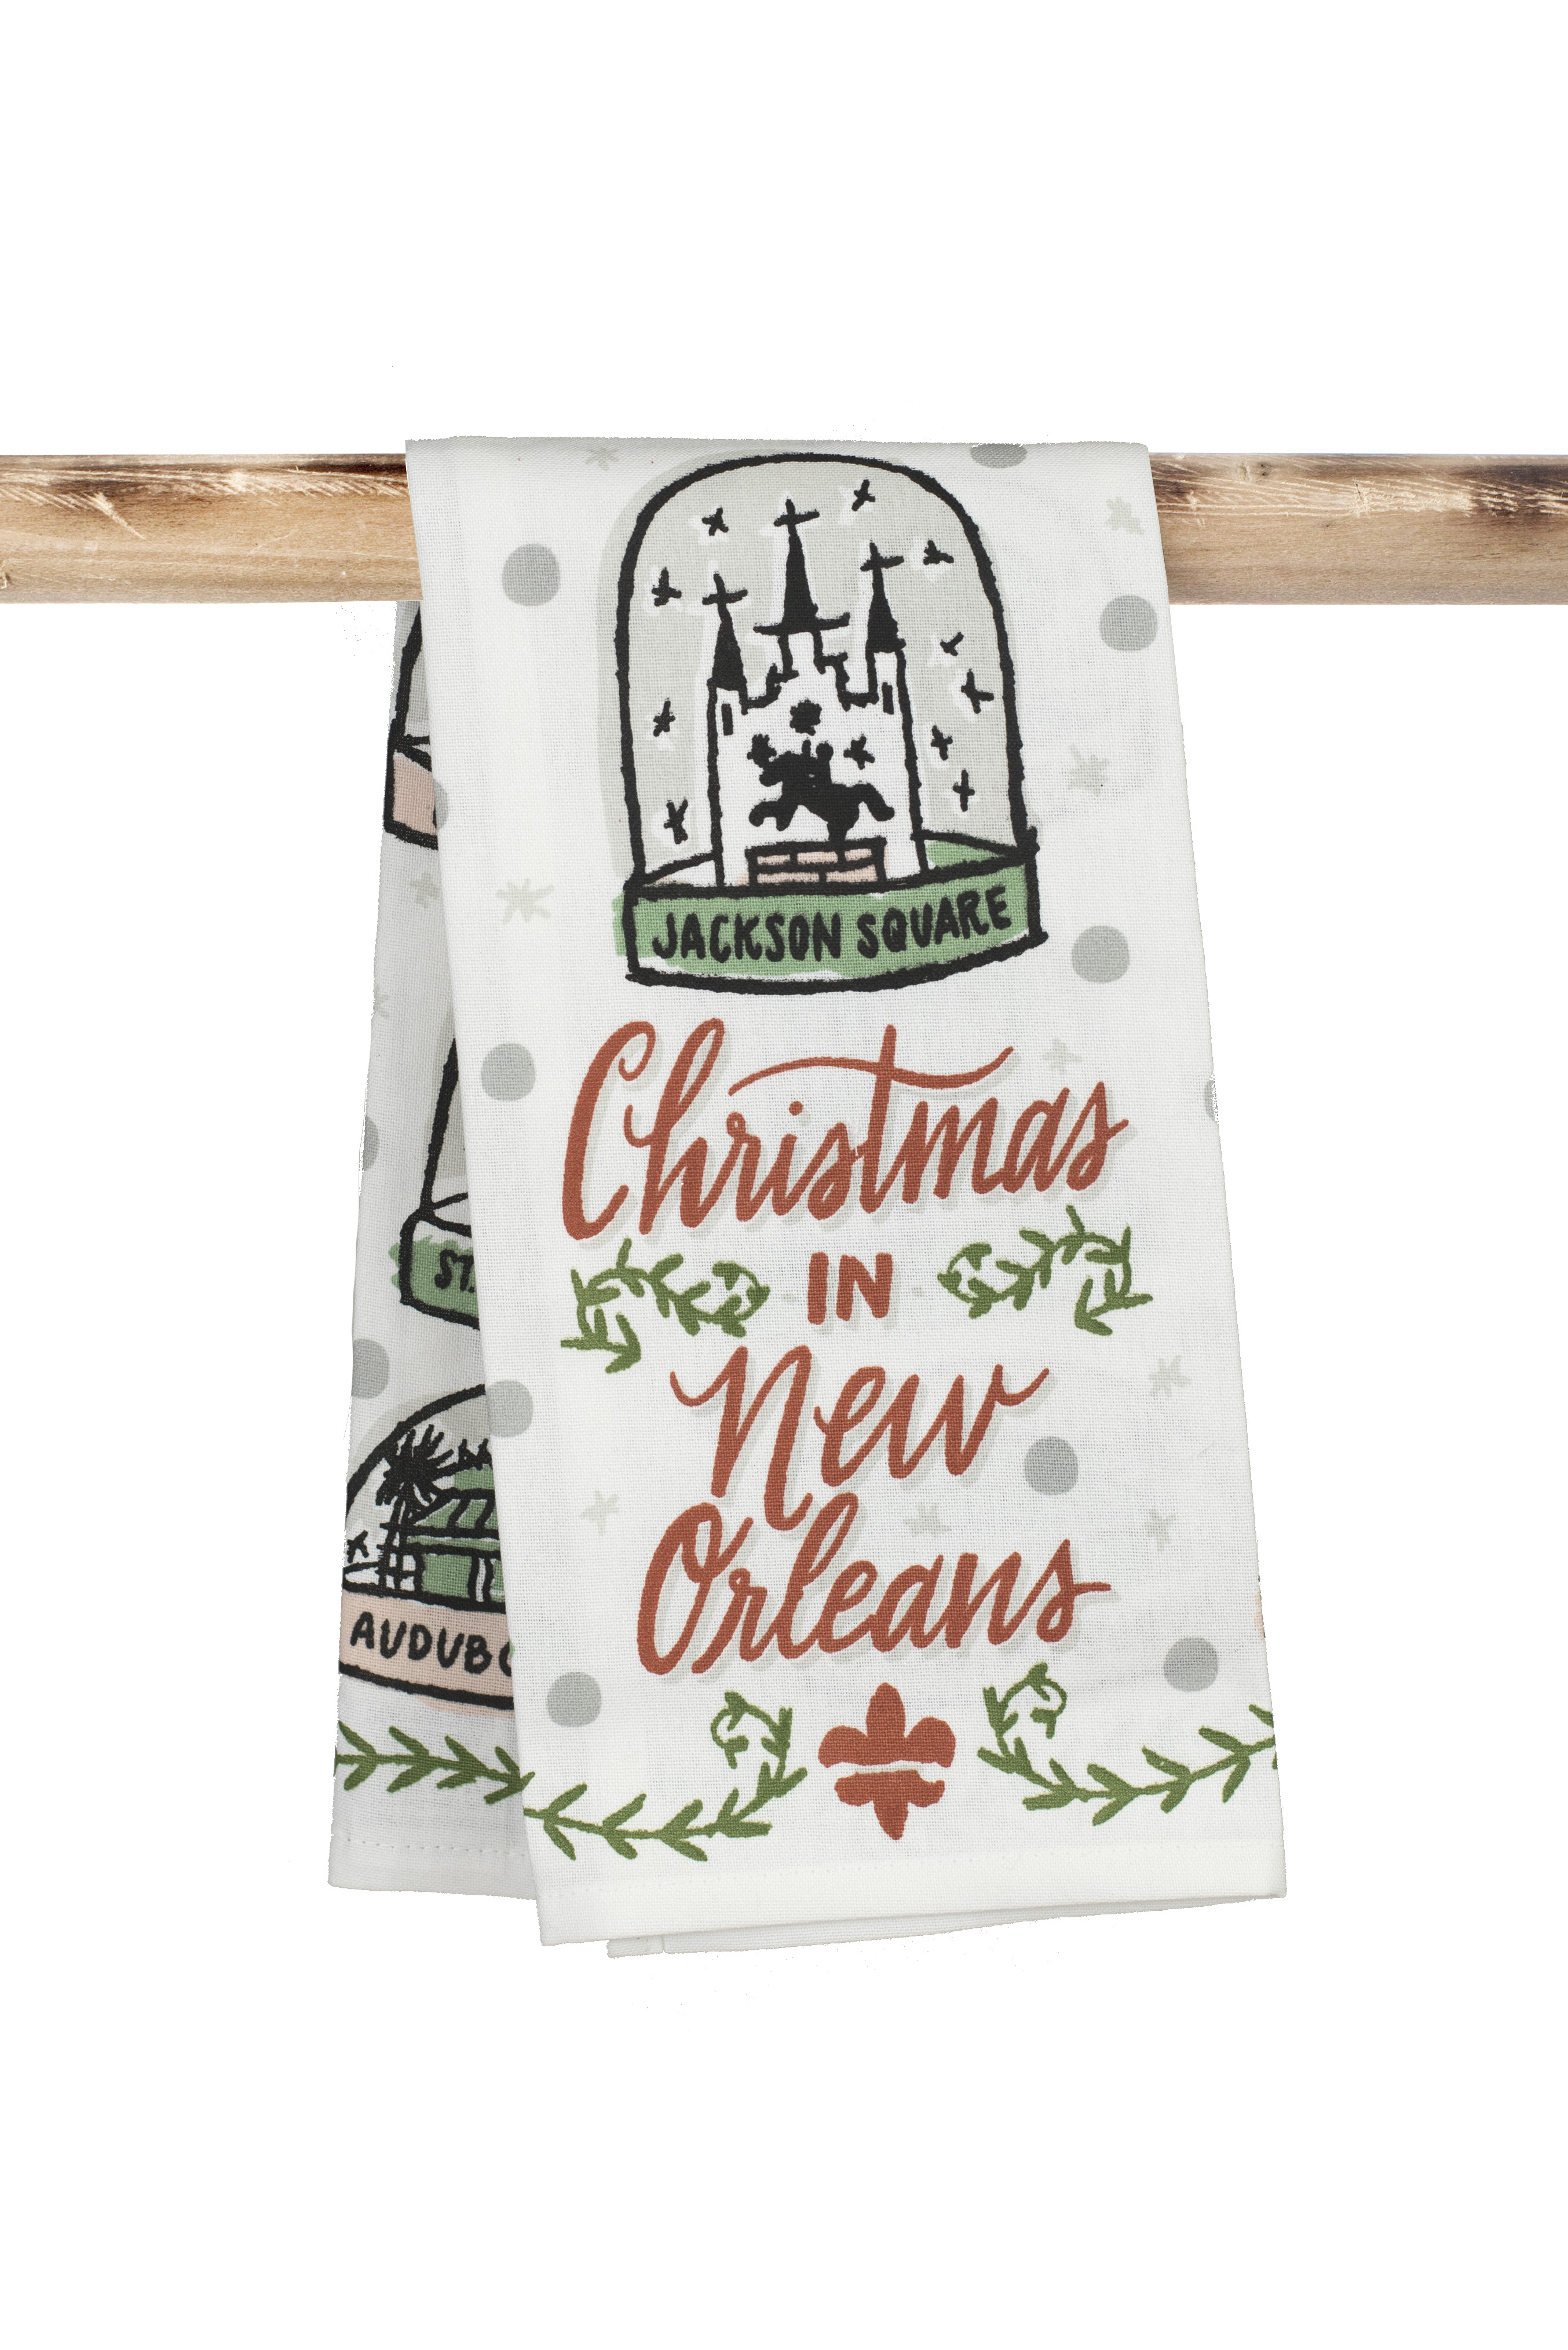 https://www.theparishline.com/wp-content/uploads/2018/12/10345-christmas-in-new-orleans-kitchen-towel.jpg